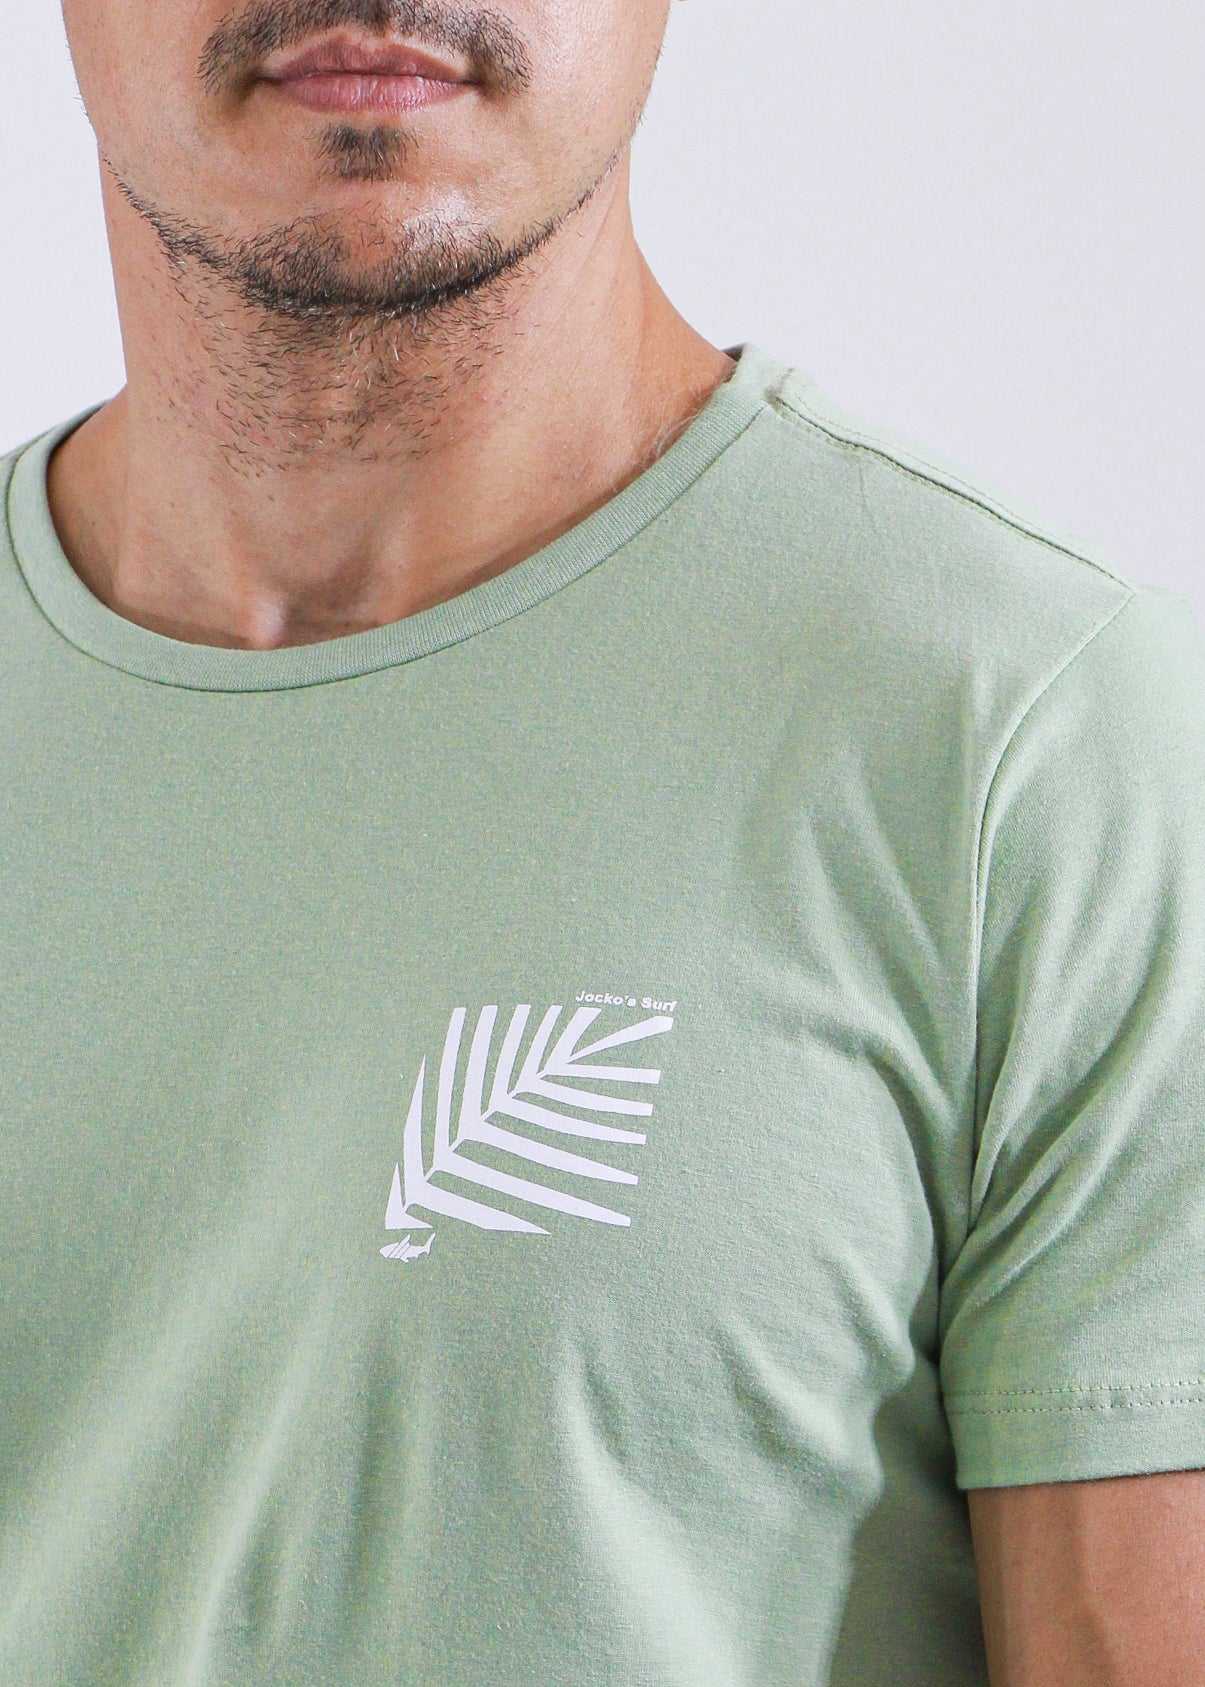 Camiseta Estampada Jocko's Surf - Verde